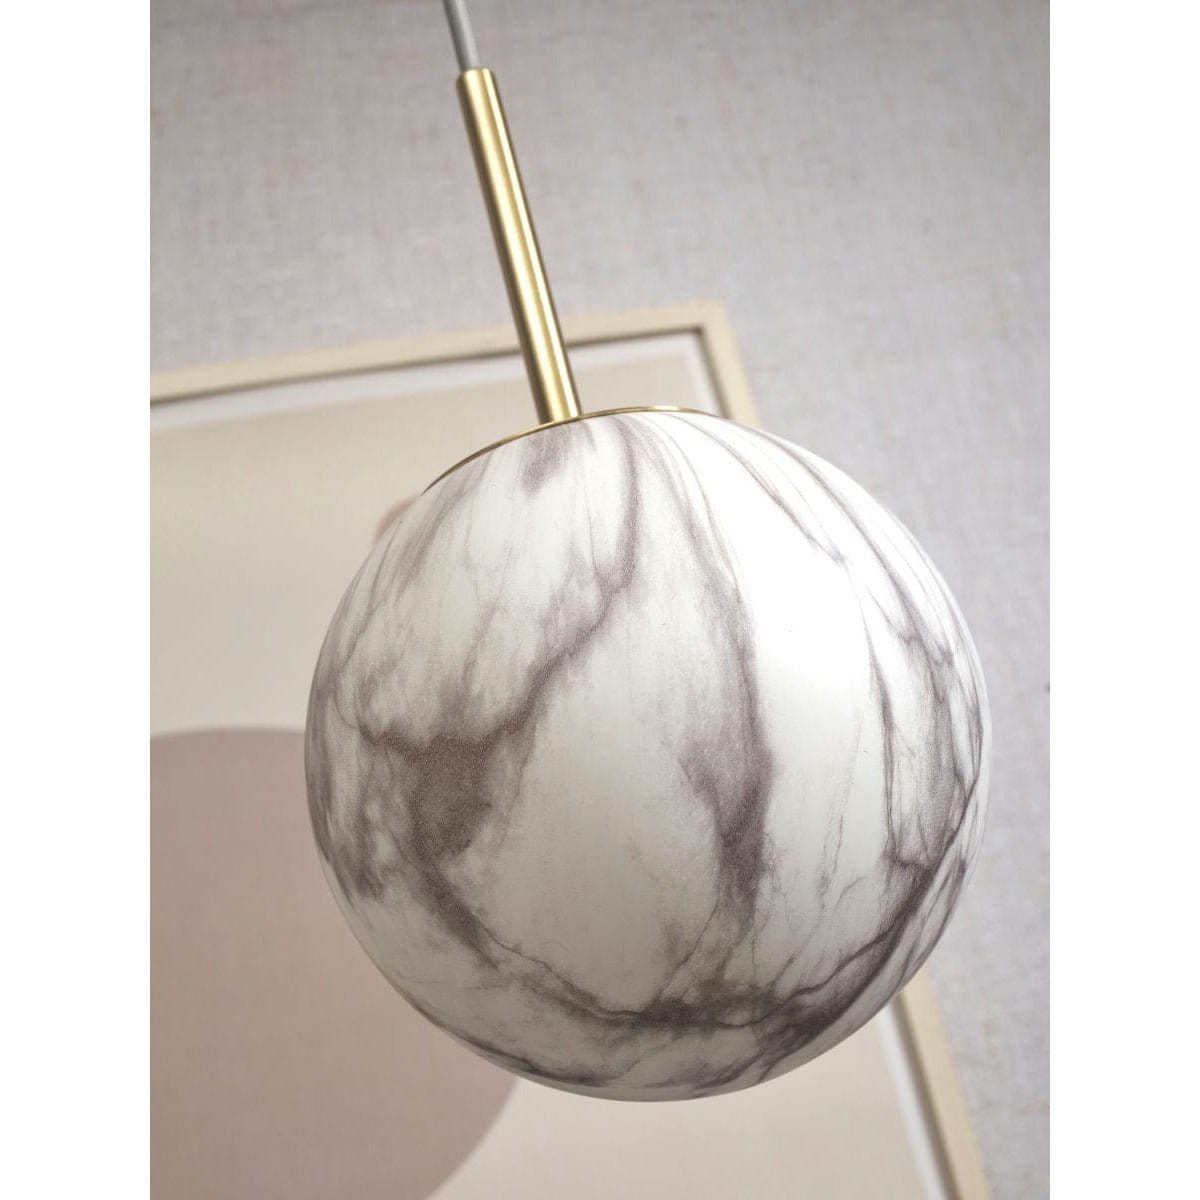 It's About RoMi Pendant lights Carrara Globe Pendant Light, small medium, or large